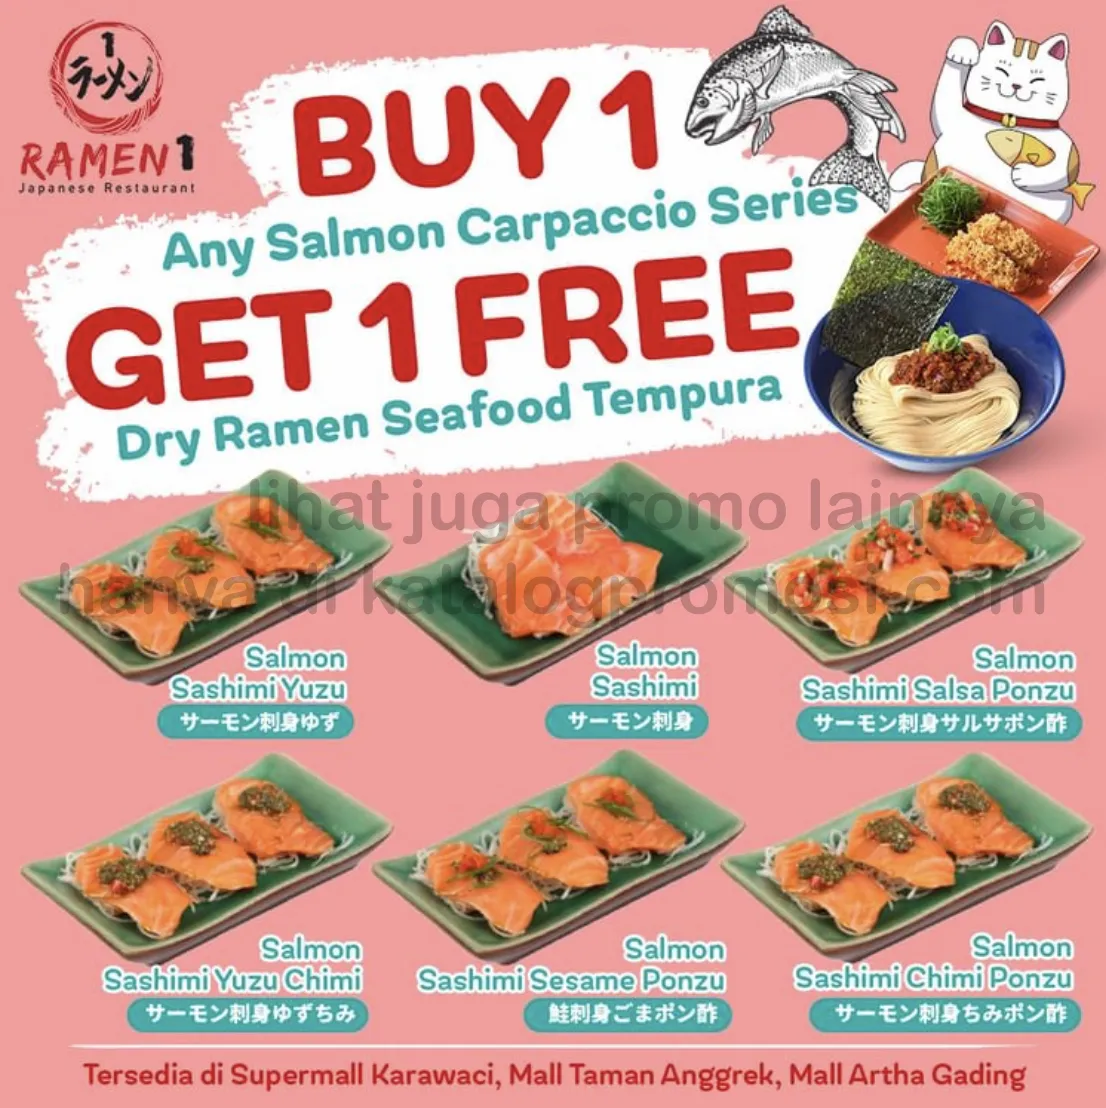 Ramen 1 Promo Buy 1 Any Salmon Carpaccio Series Get 1 Free Dry Ramen*